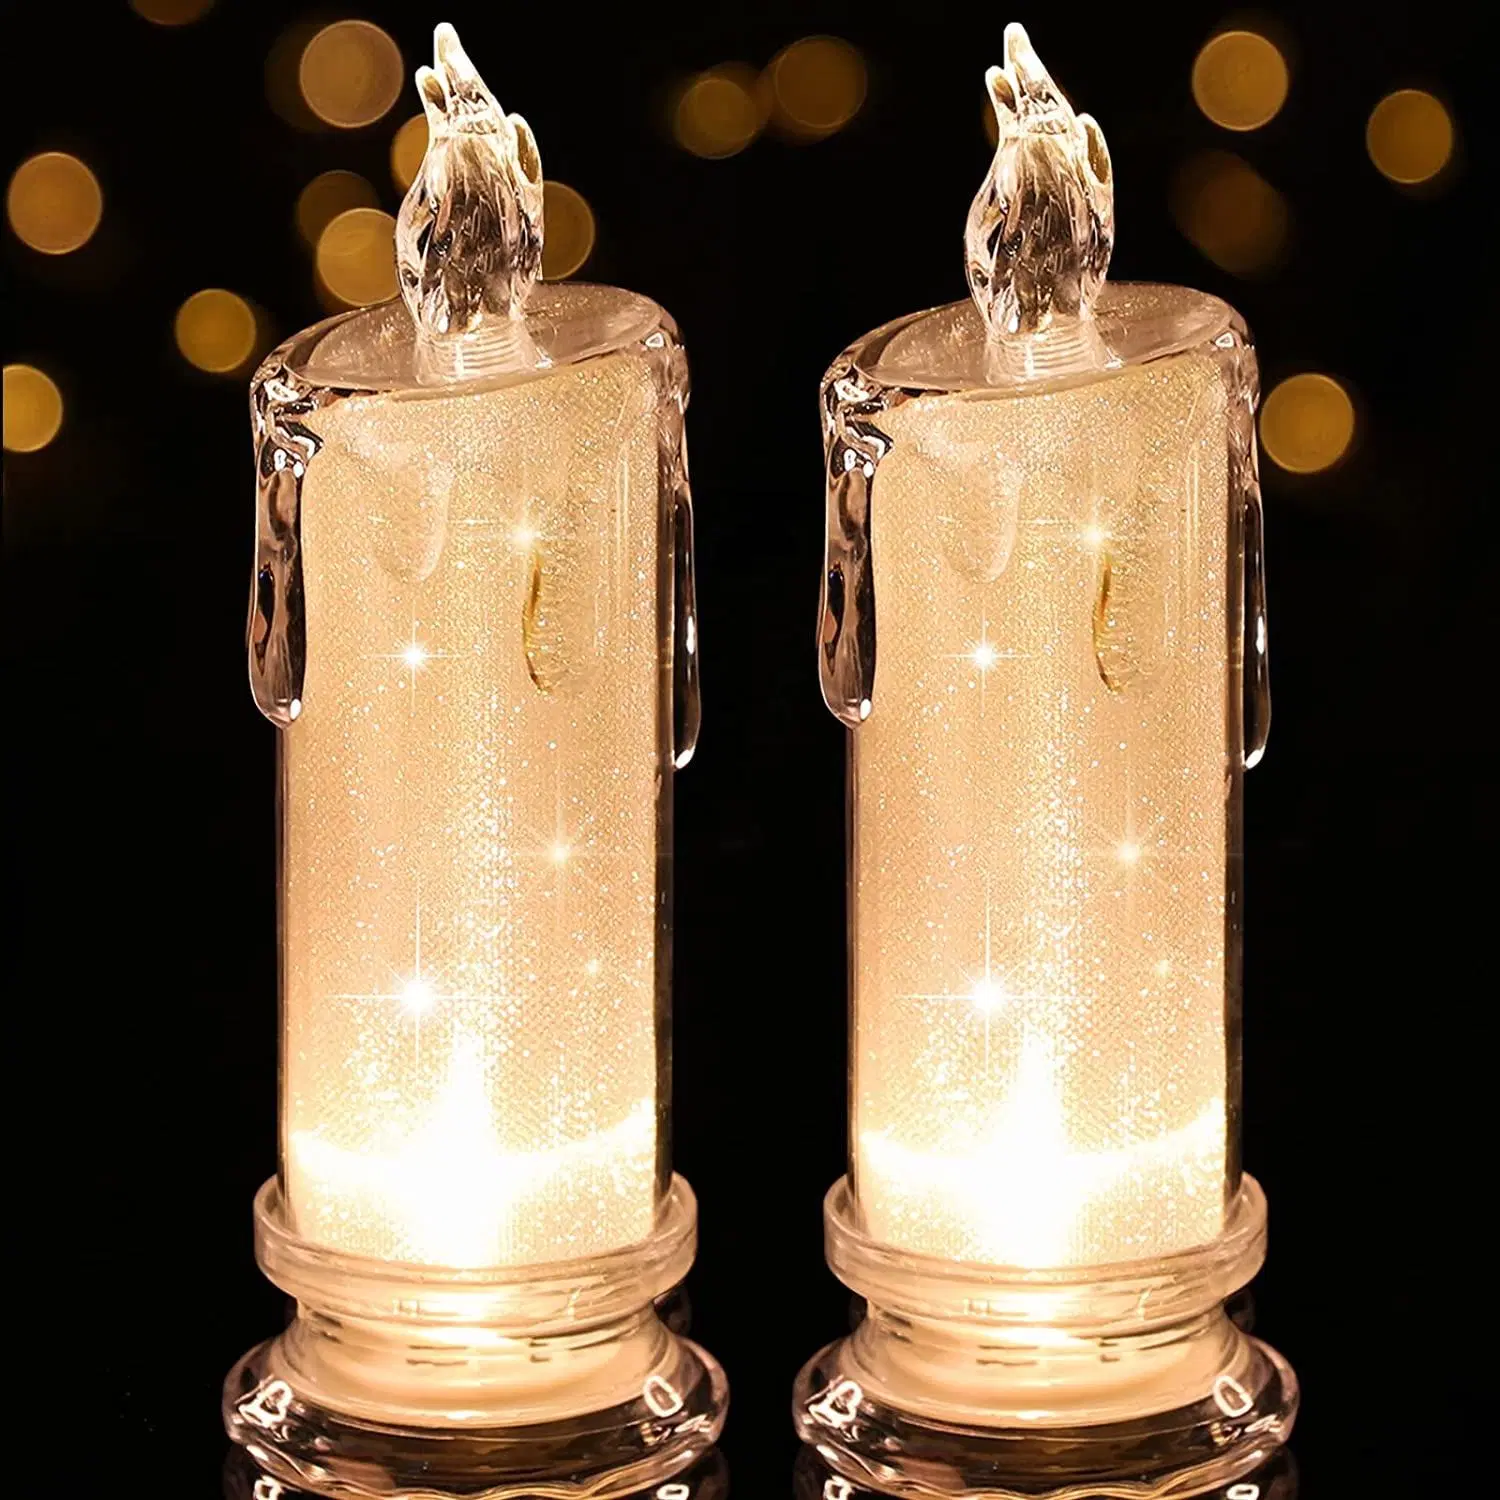 LED Flammenlose Kerzen flackernde LED-Säulen-Kerzen Batteriebetriebene Kerzen Für Party Hochzeit Haus Dekorationen